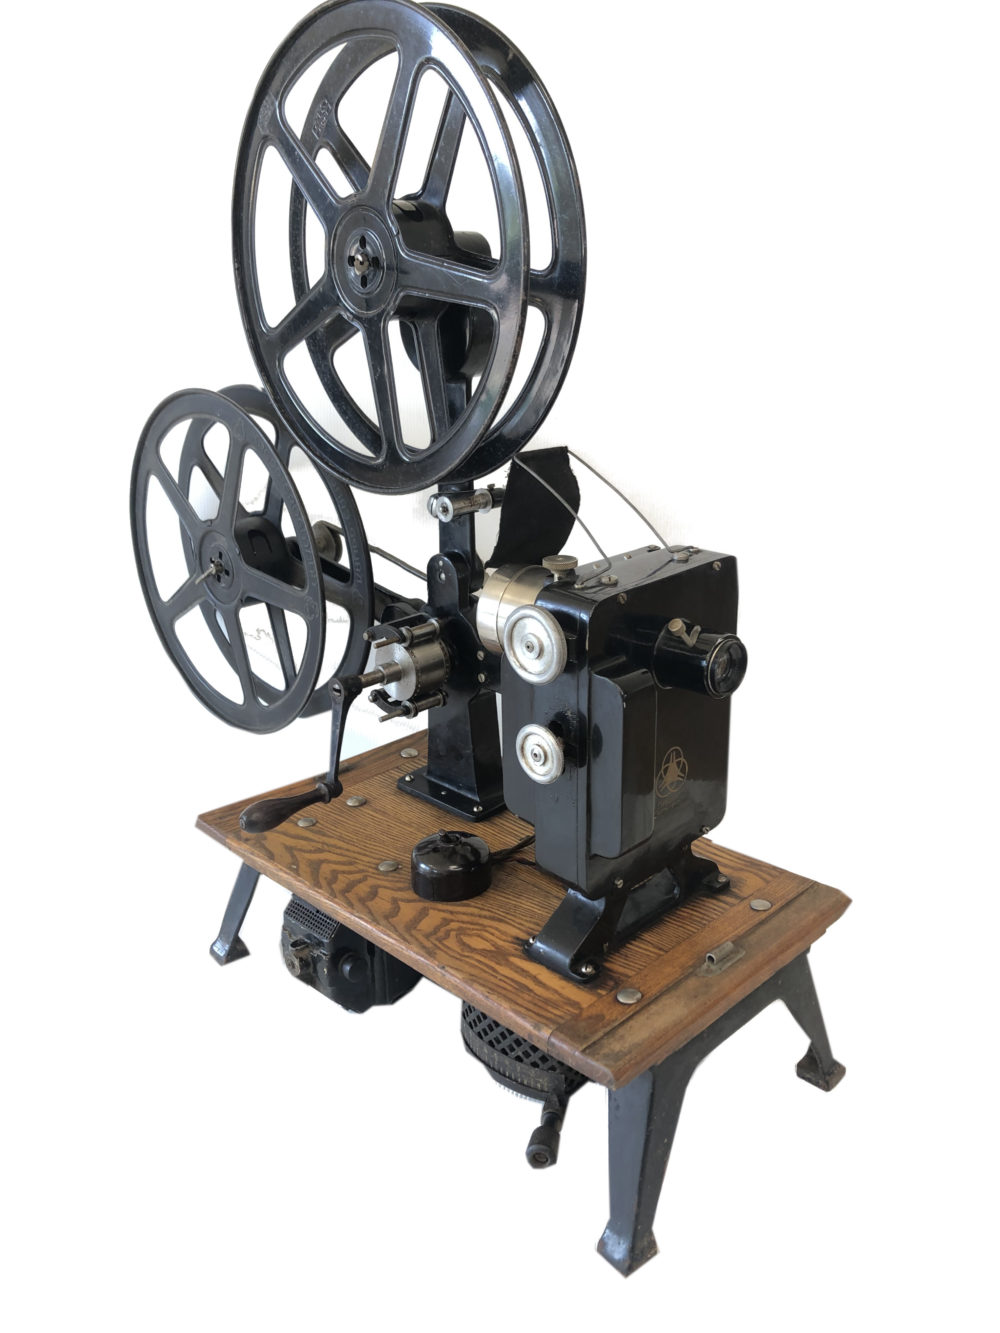 Krupp-Ernemann Kinox projecteur cinéma 35 mm vers 1925 Allemagne.